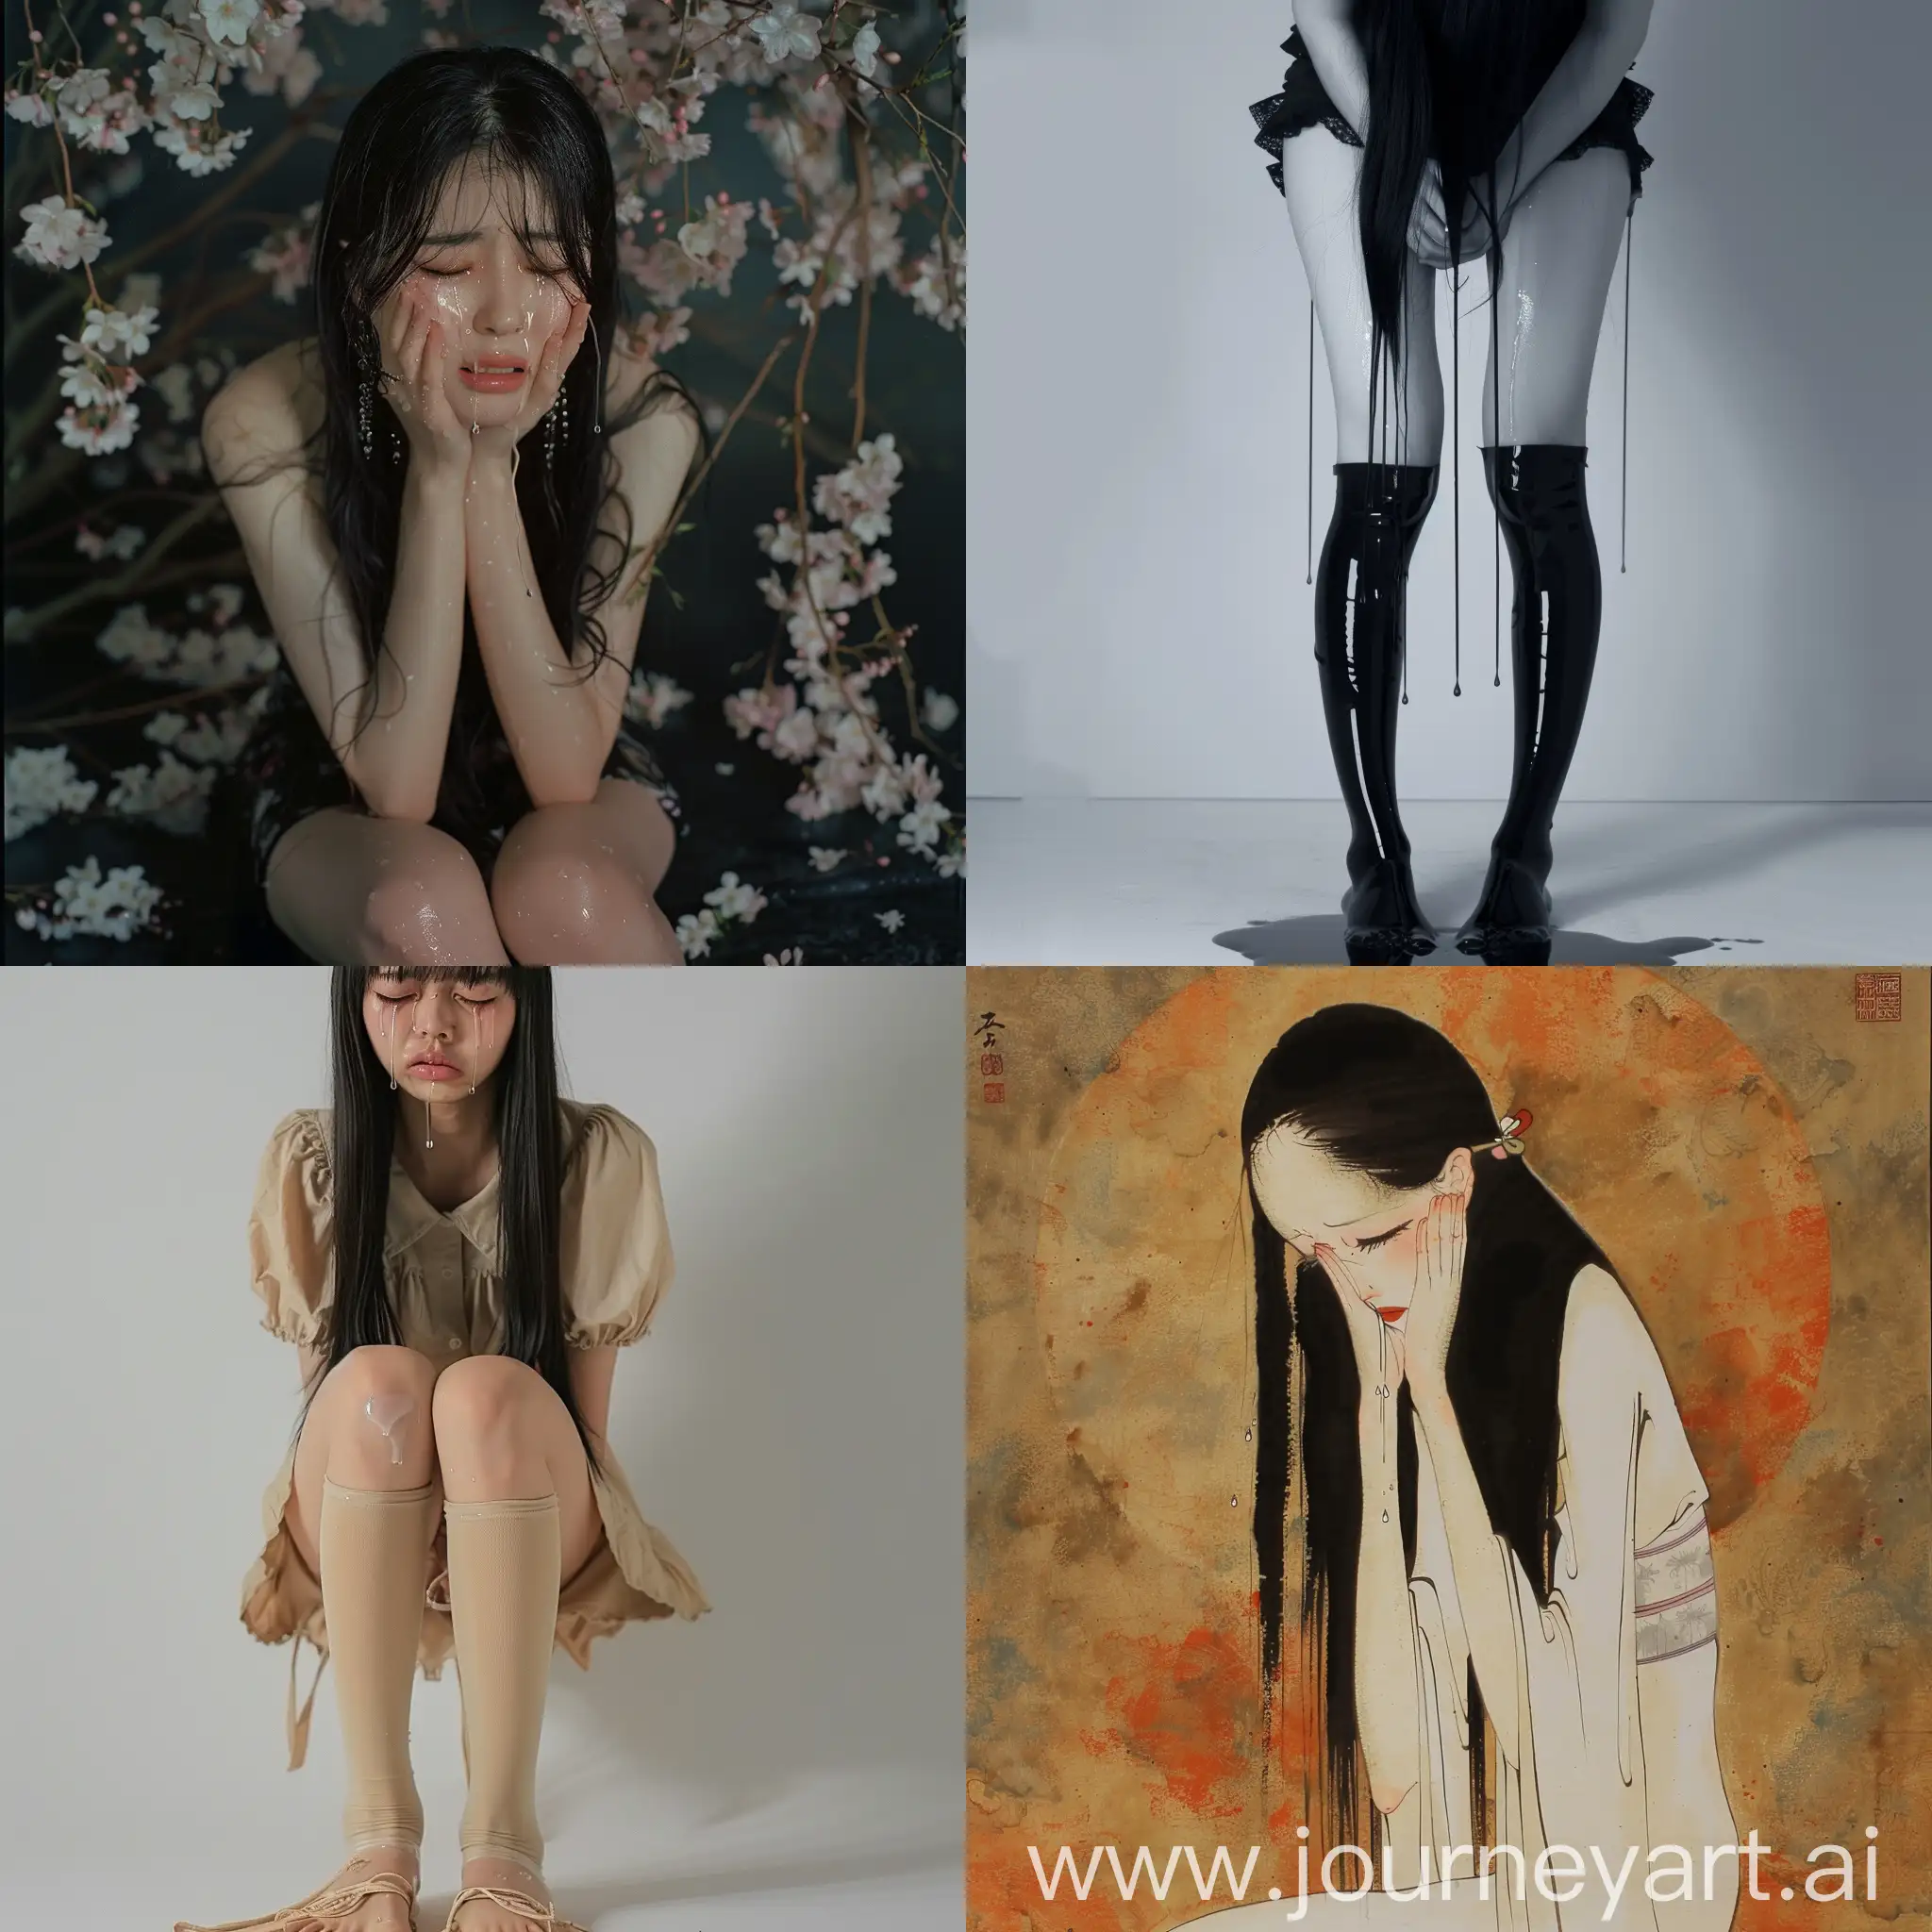 skinny long legged japanese beauty crying in tears